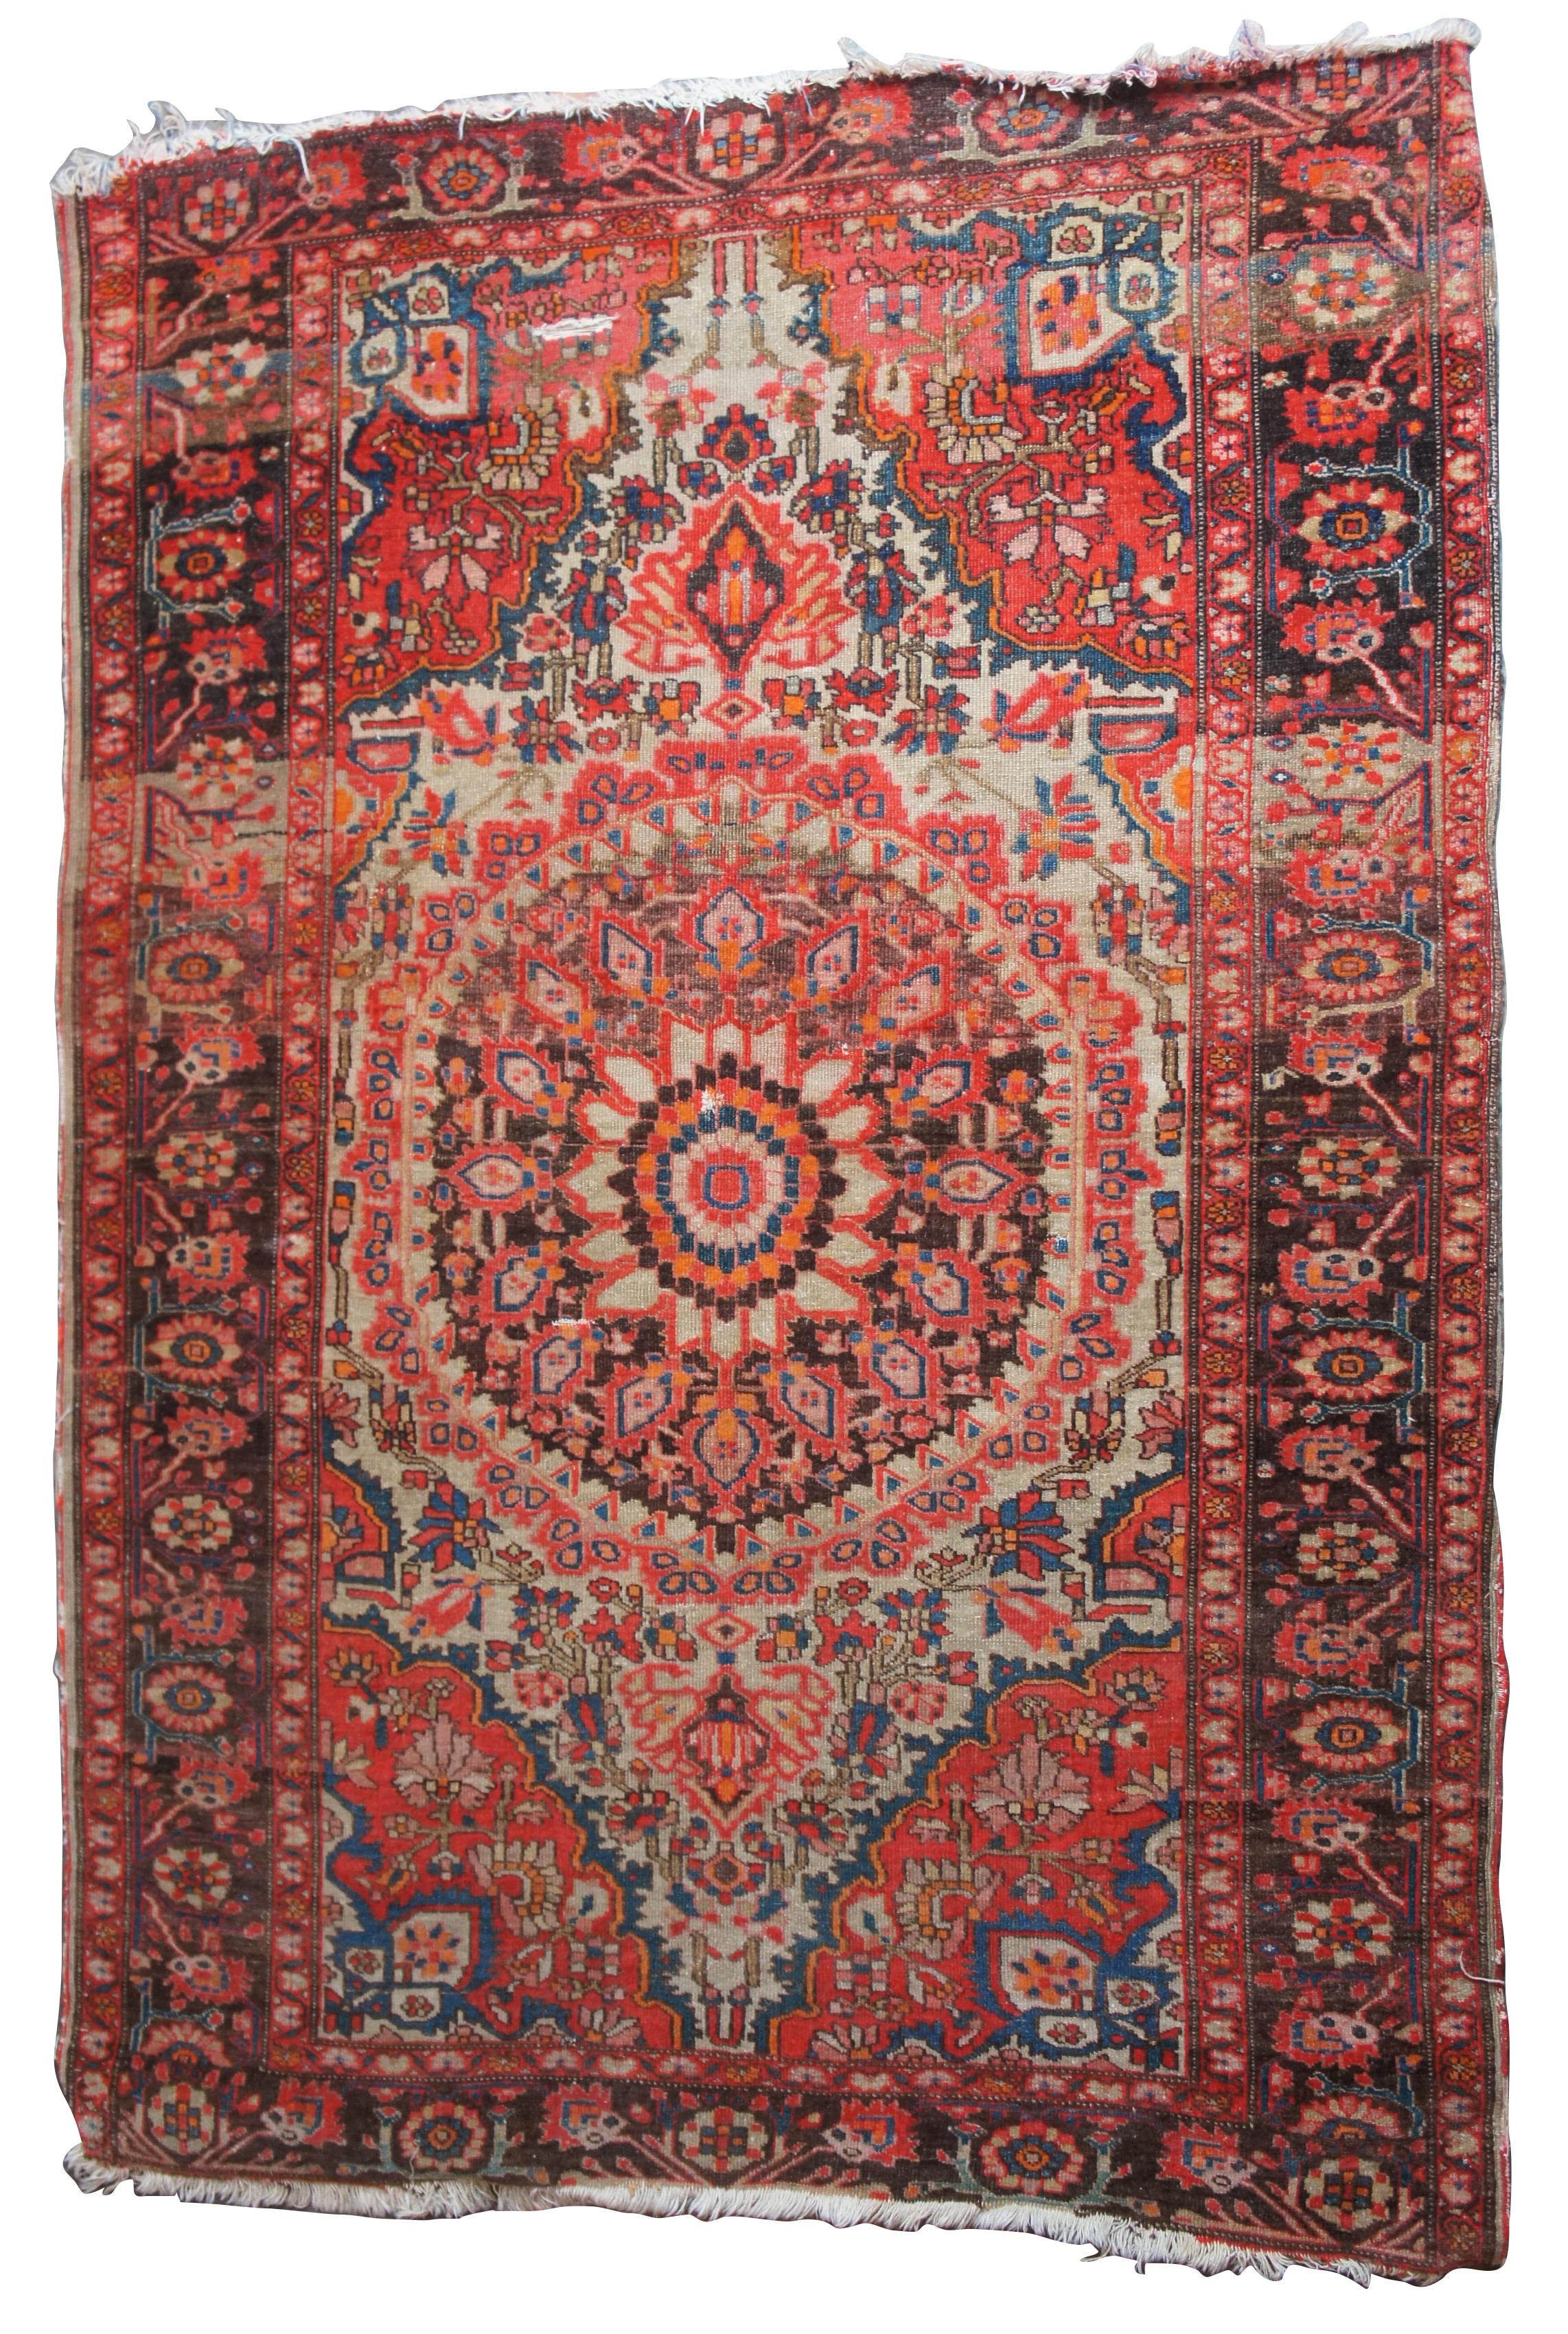 Vintage hand knotted Persian wool Kashmar prayer rug mat red orange blue, measures: 56